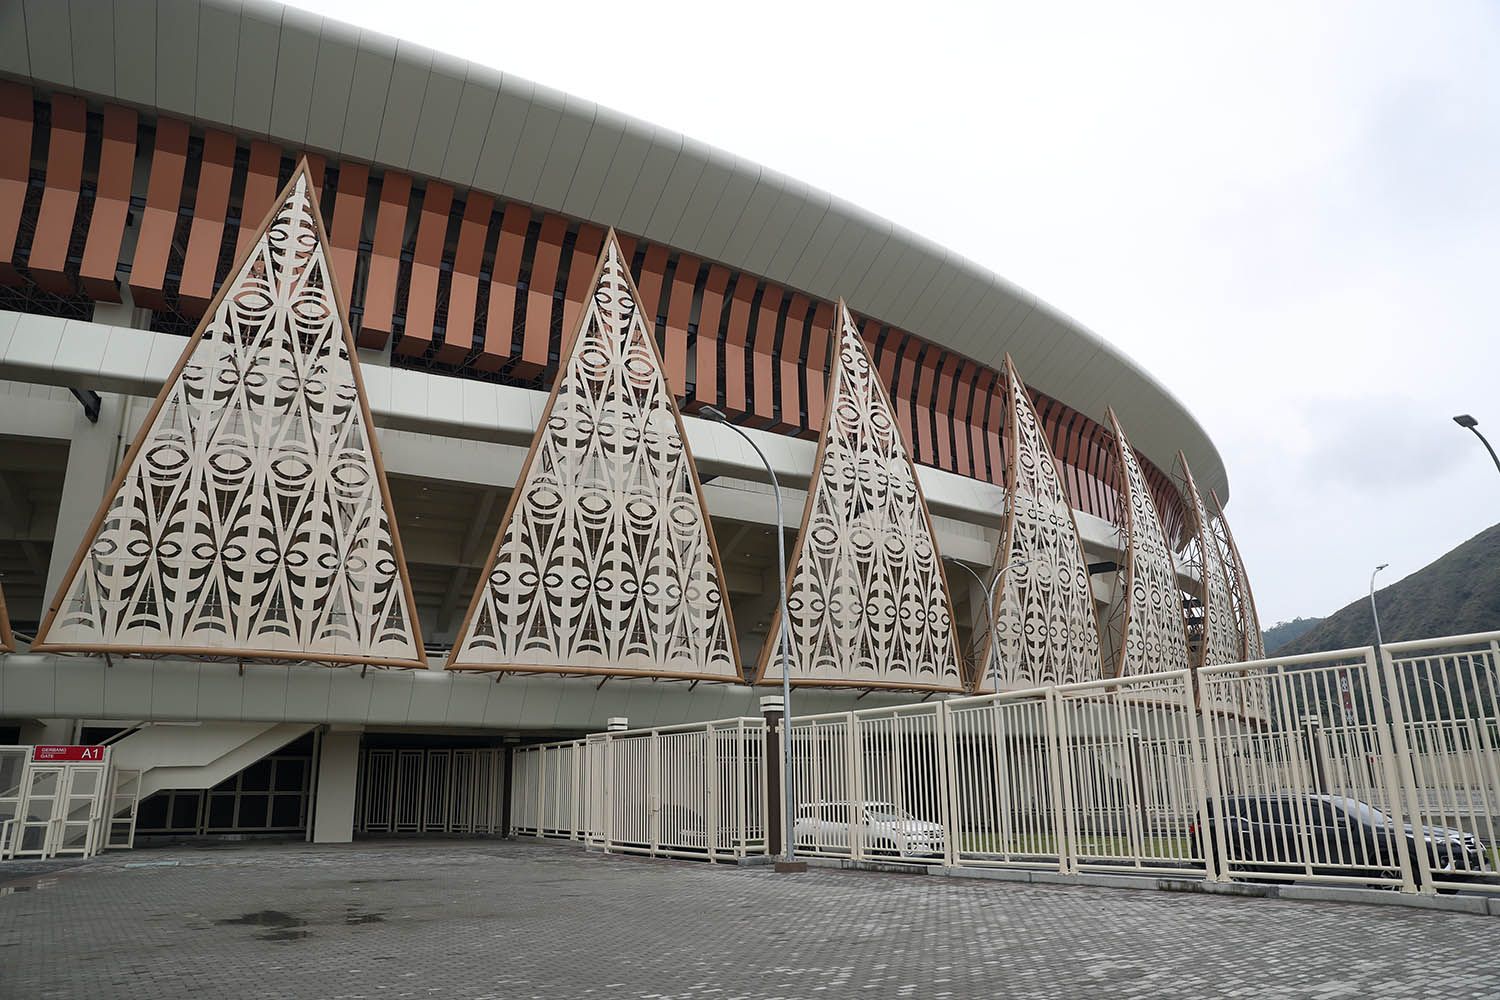 Pemerintah Didesak Ganti Nama Stadion Lukas Enembe setelah Gubernur Terjerat Kasus Korupsi